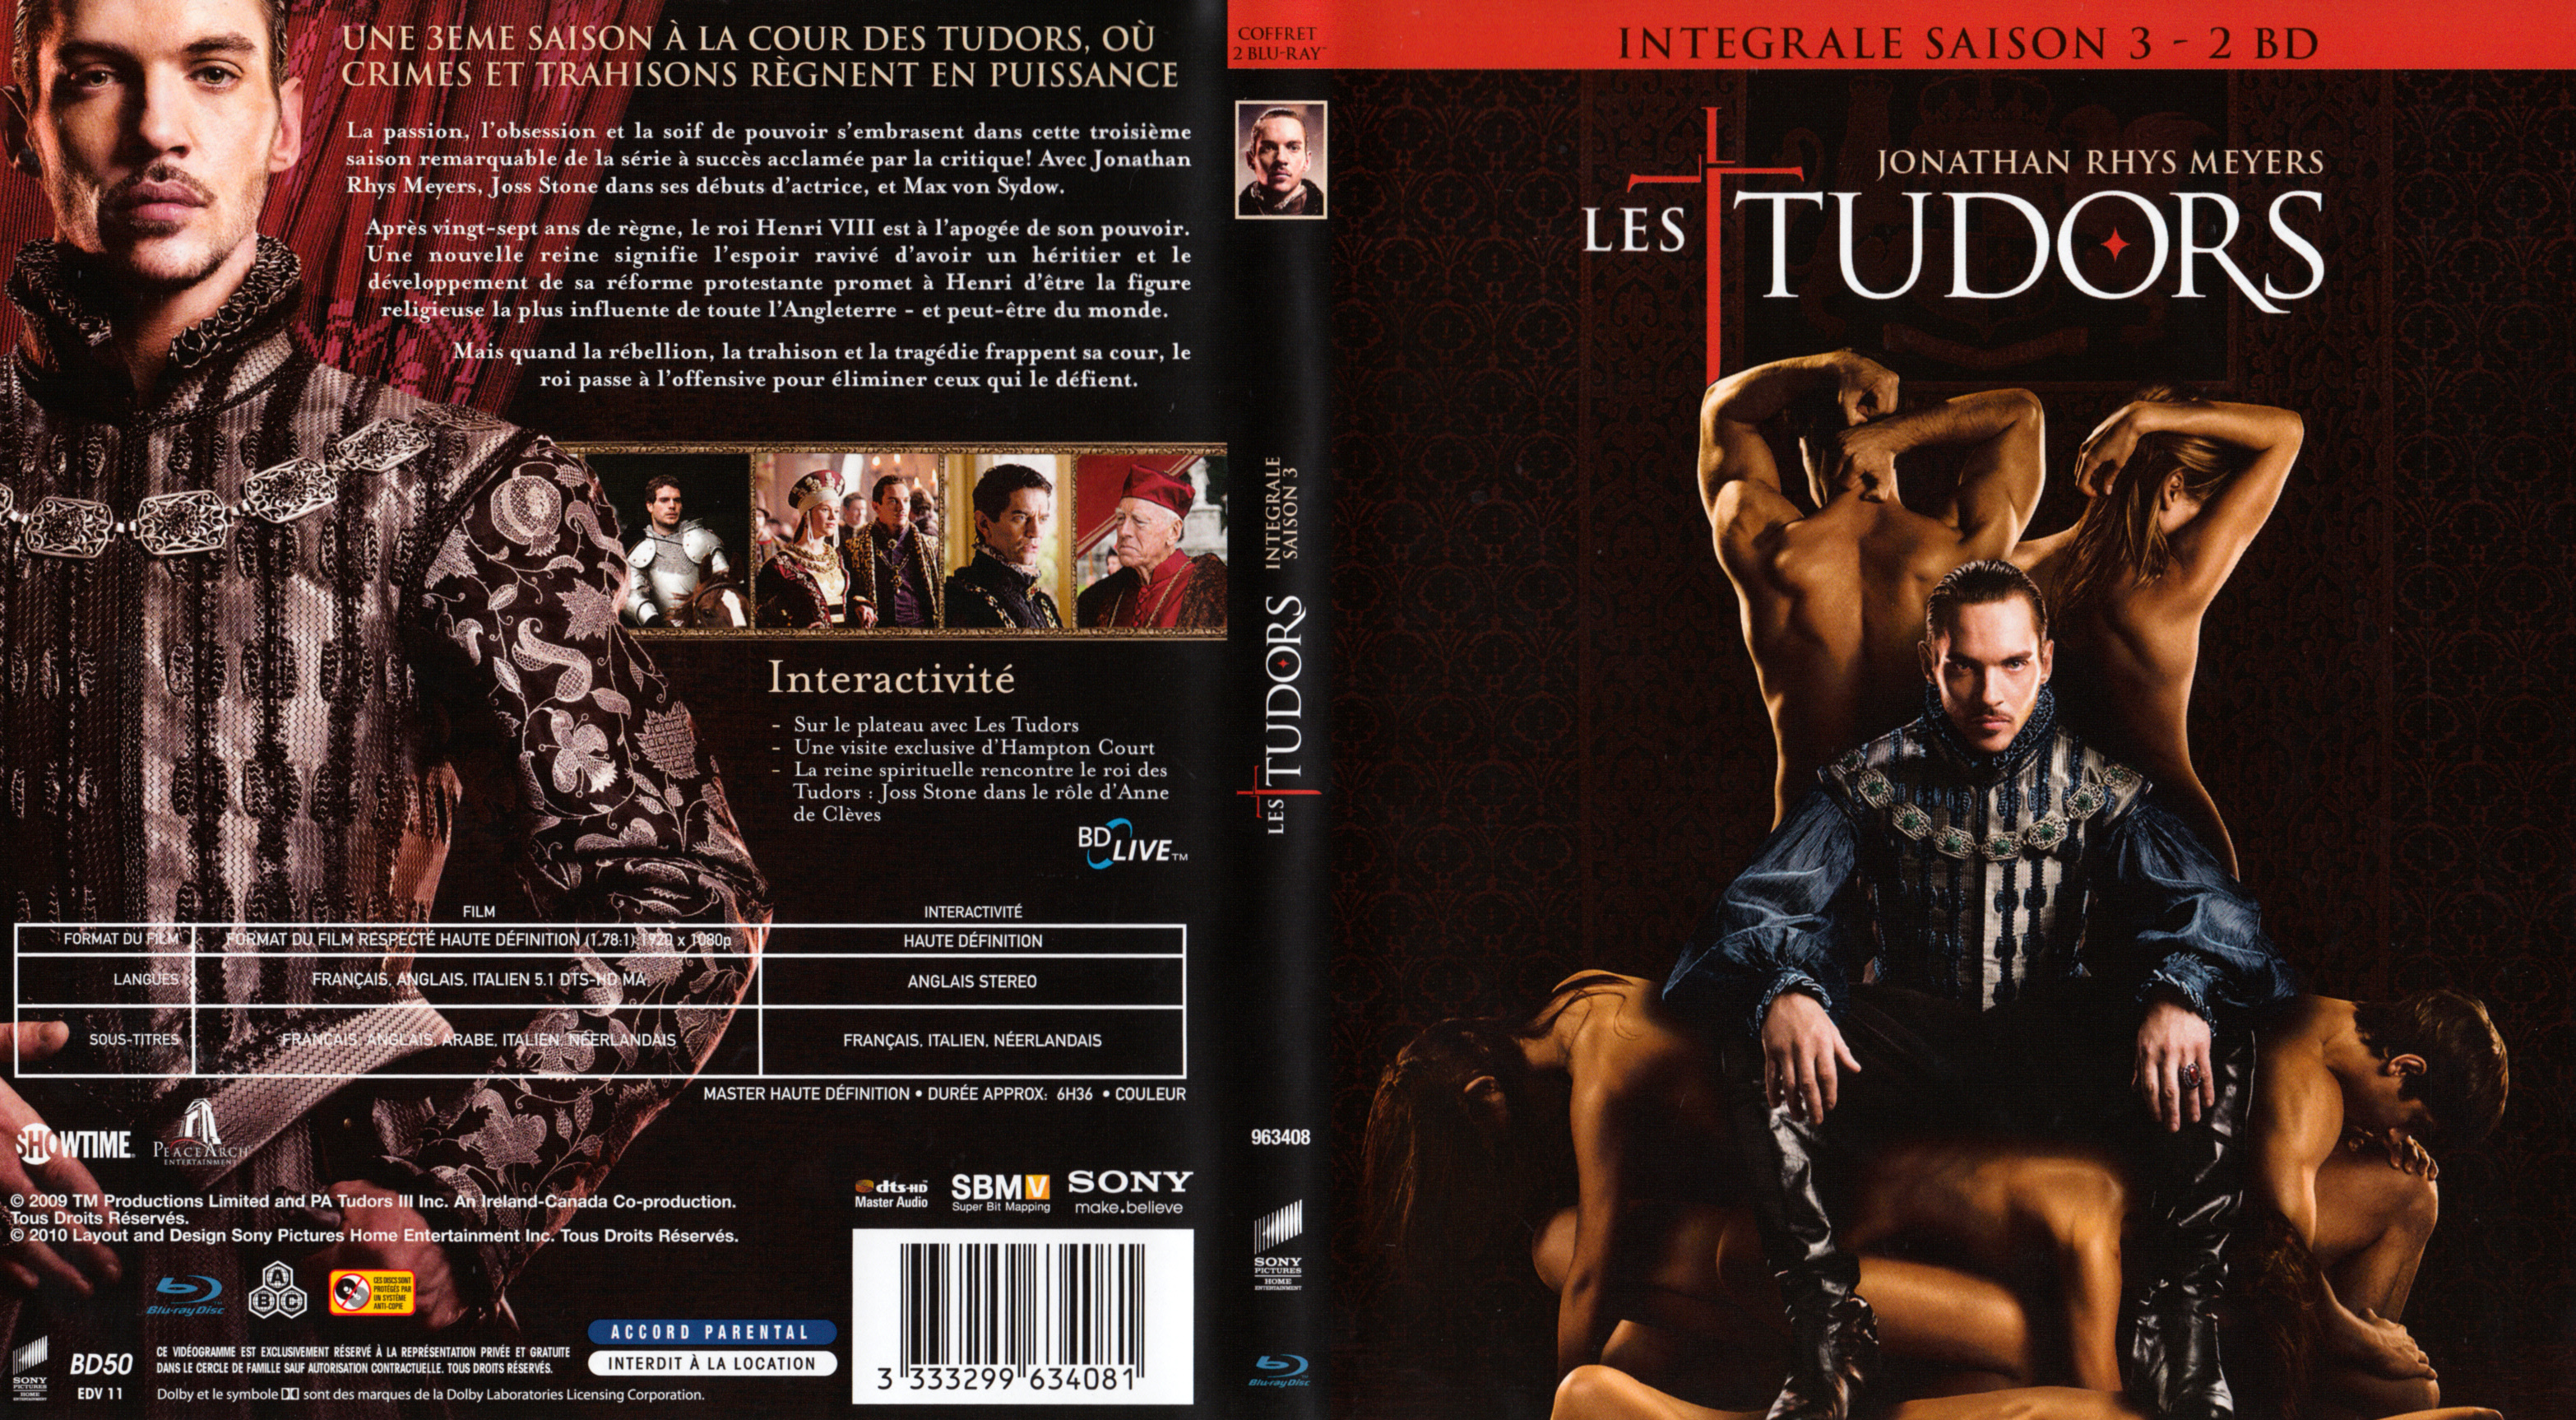 Jaquette DVD Les Tudors saison 3 (BLU-RAY)